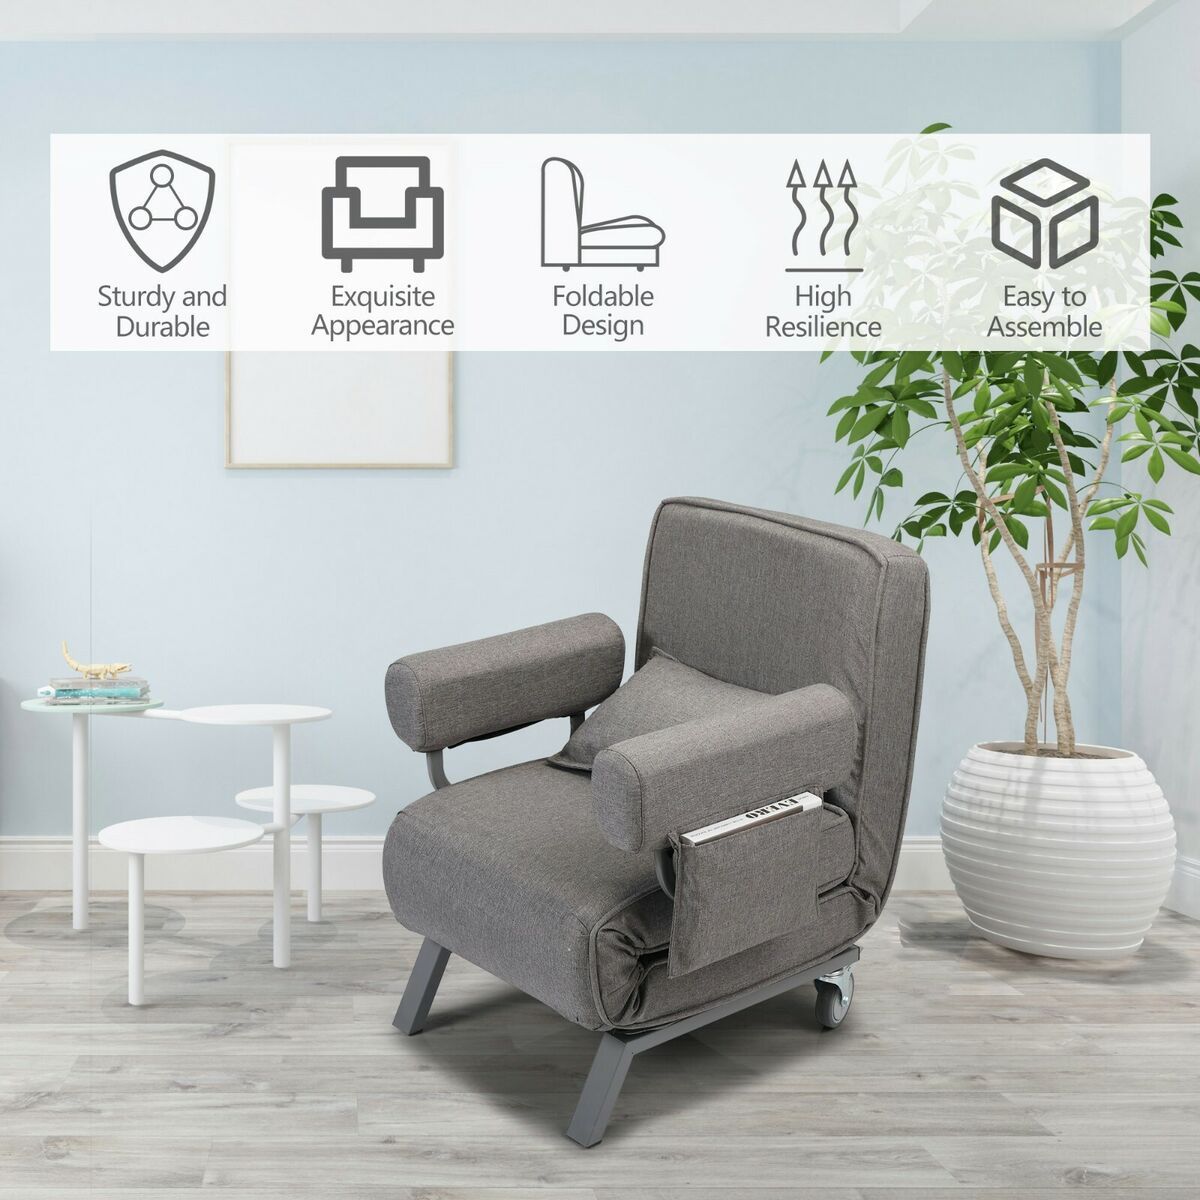 6 Positions Folding Sofa Bed Convertible Sleeper Chair Leisure Lounge Light  Grey | Ebay Regarding Convertible Light Gray Chair Beds (View 11 of 15)